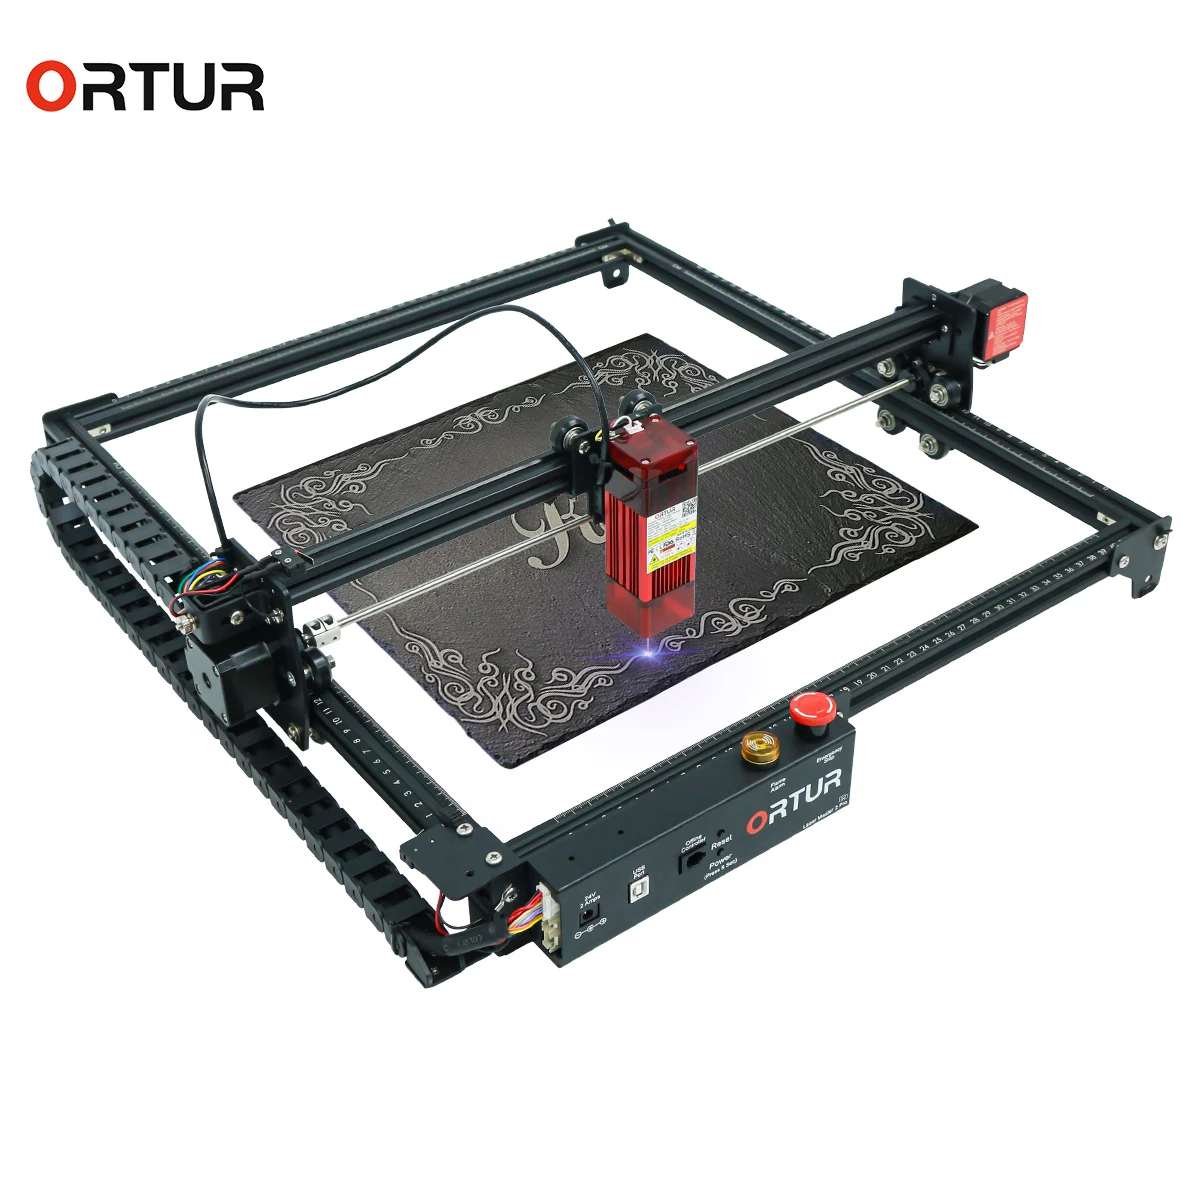 

Ortur High Speed Desktop Laser Engraving Machine LaserGRBL Control Logo Marking Engraver Printer DIY Carving Cutter Engraver Kit